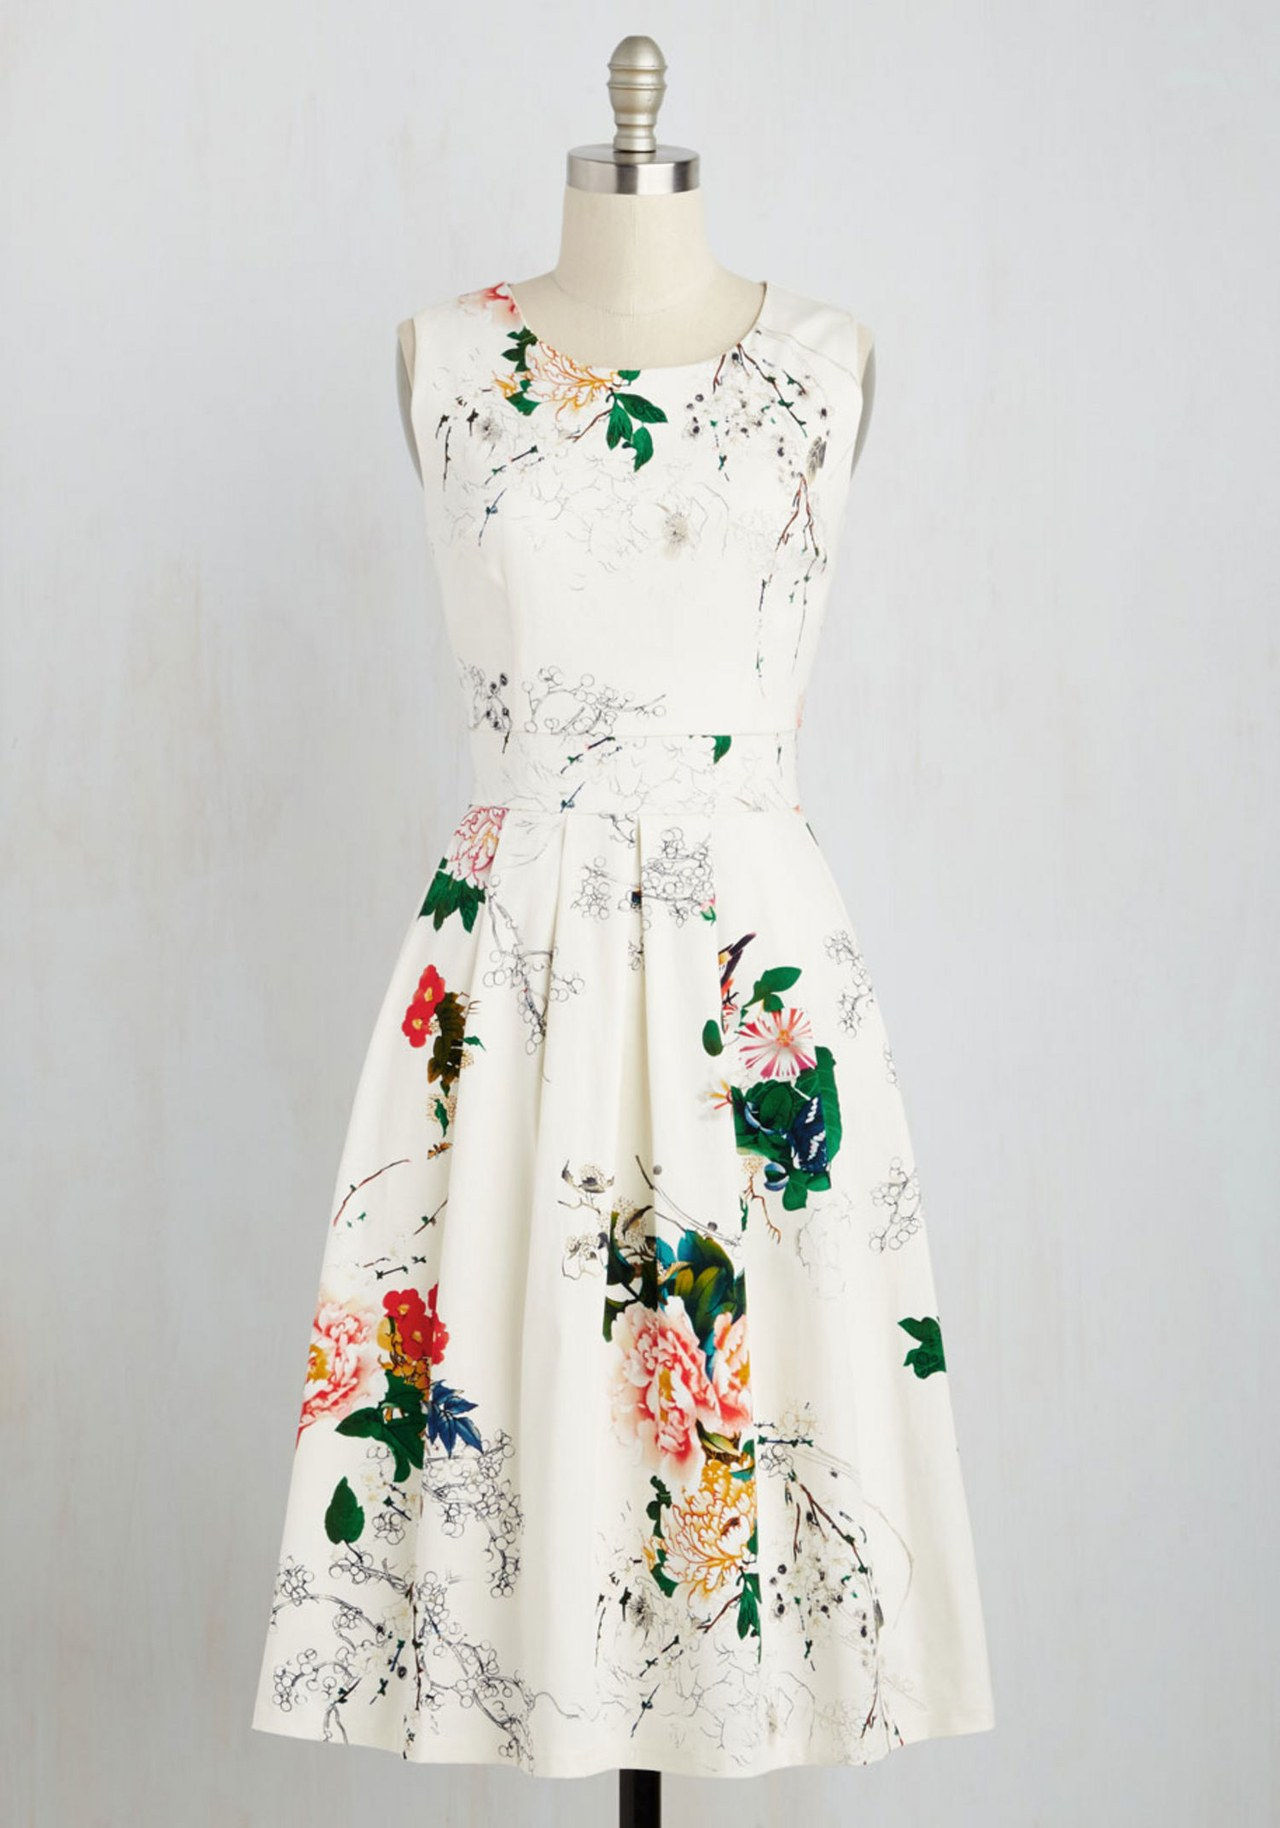 3 floral bridesmaid dresses 0127 courtesy